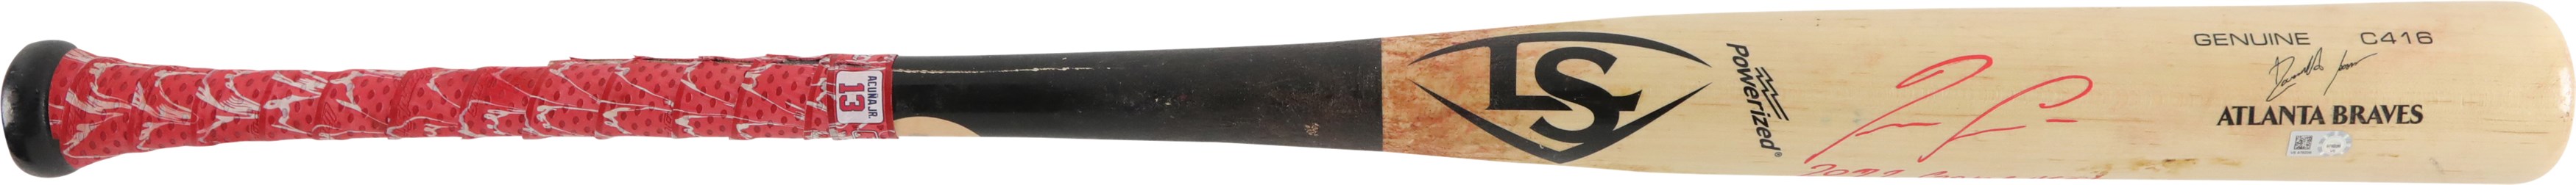 Baseball Equipment - 6/10/22 Ronald Acuna Jr. Atlanta Braves Career Hits #461 & 462 Signed Game Used Bat (Photo-Matched & MLB Holo)